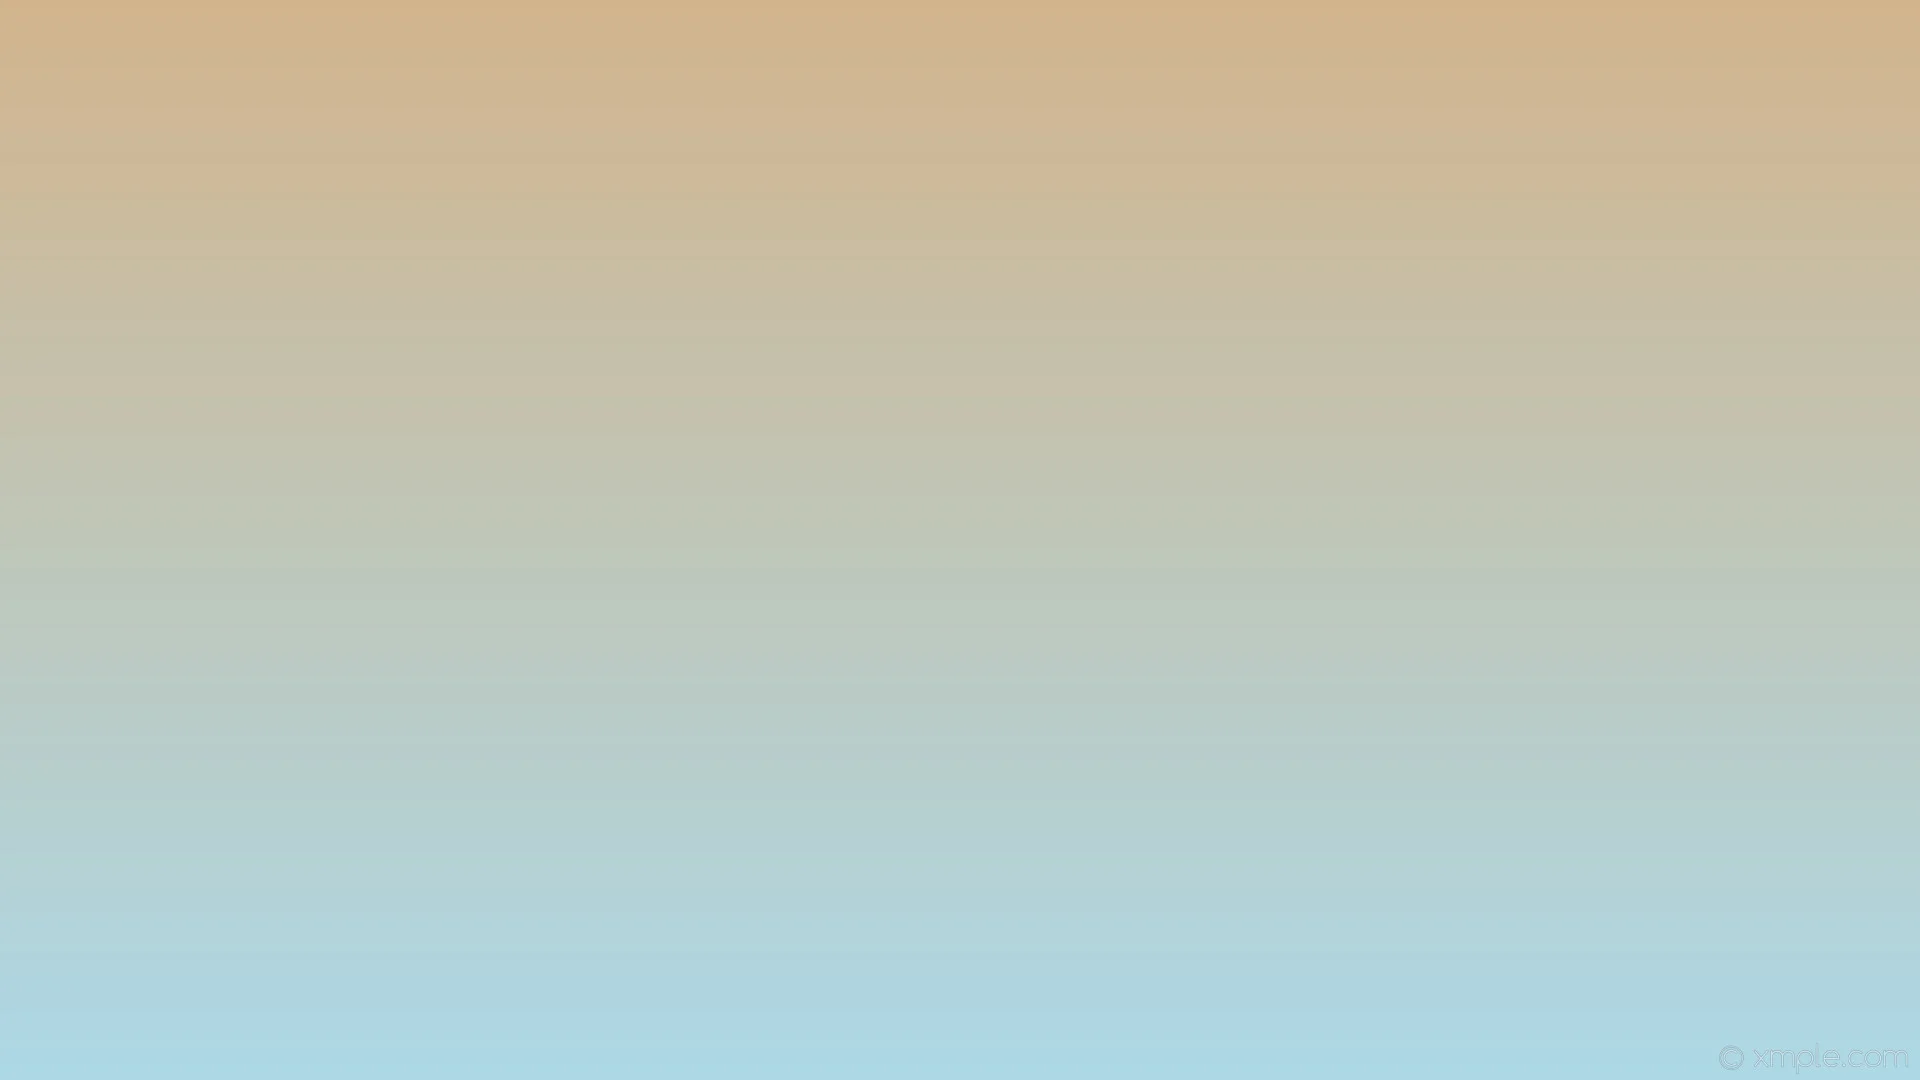 Wallpaper brown blue gradient linear tan light blue #d2b48c #add8e6 90